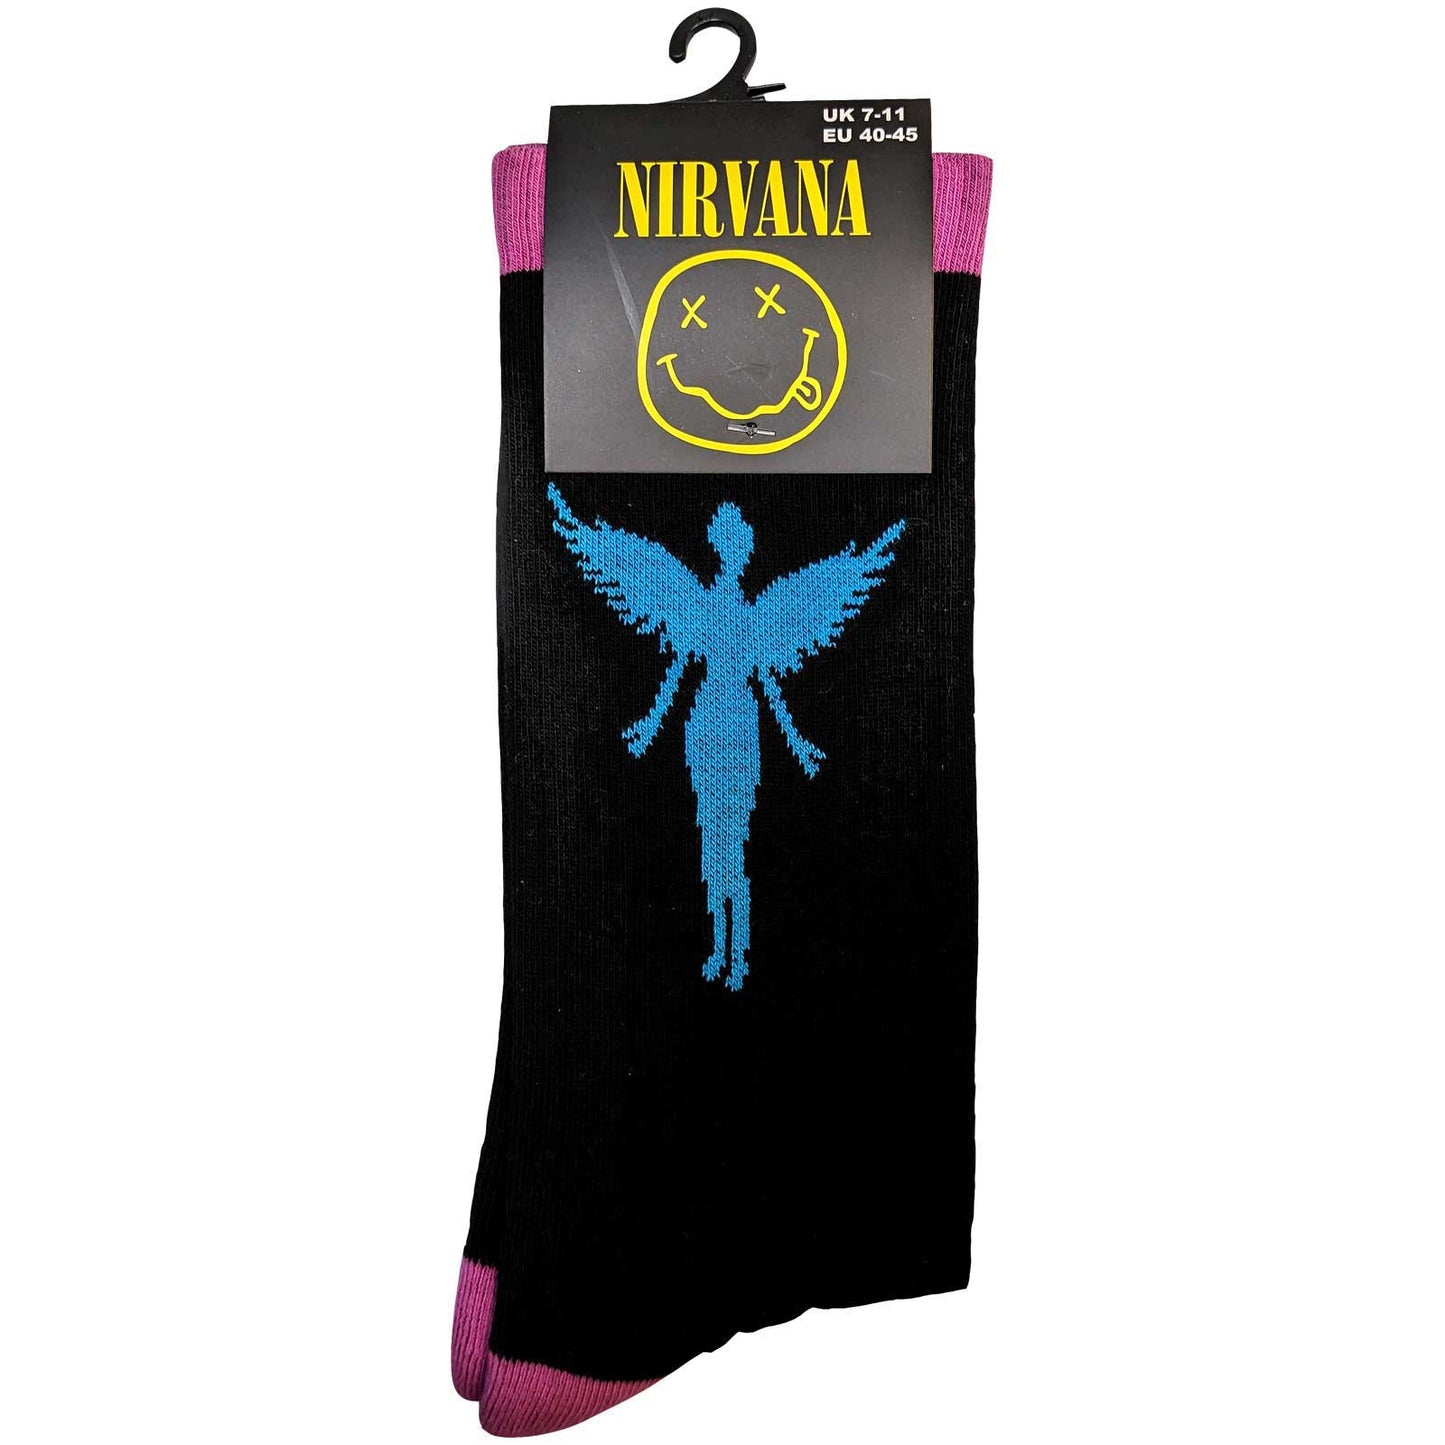 Nirvana In Utero Blue Angel Unisex Ankle Socks